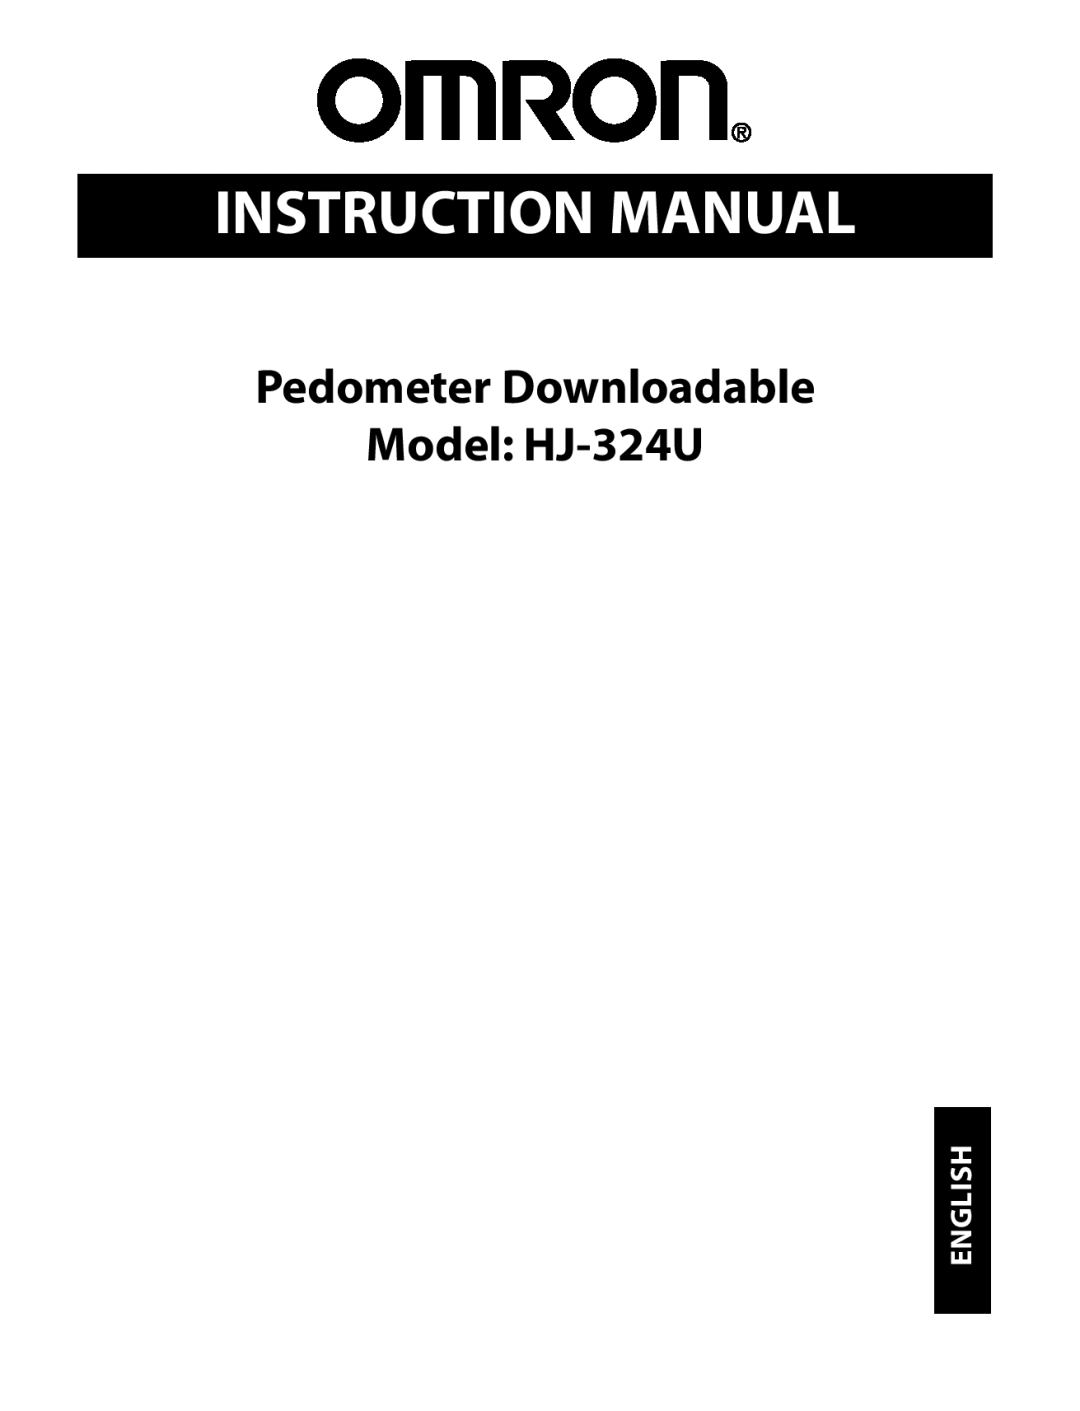 Omron instruction manual Instruction Manual, Pedometer Downloadable Model HJ-324U, English 